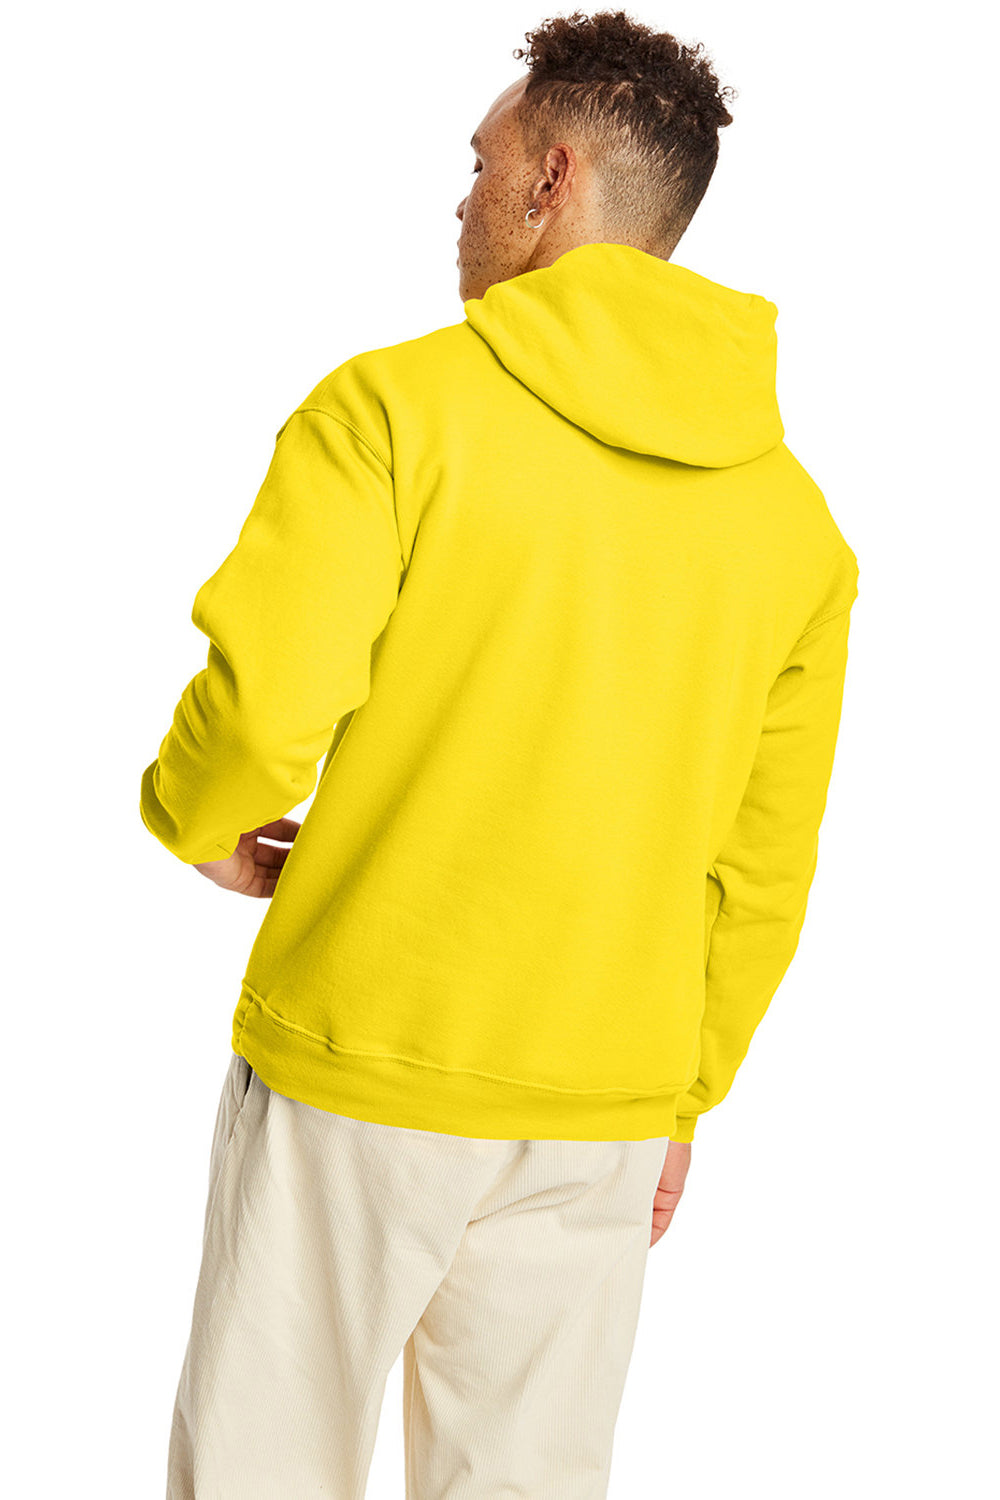 Hanes P170 Mens EcoSmart Print Pro XP Hooded Sweatshirt Hoodie Athletic Yellow Back